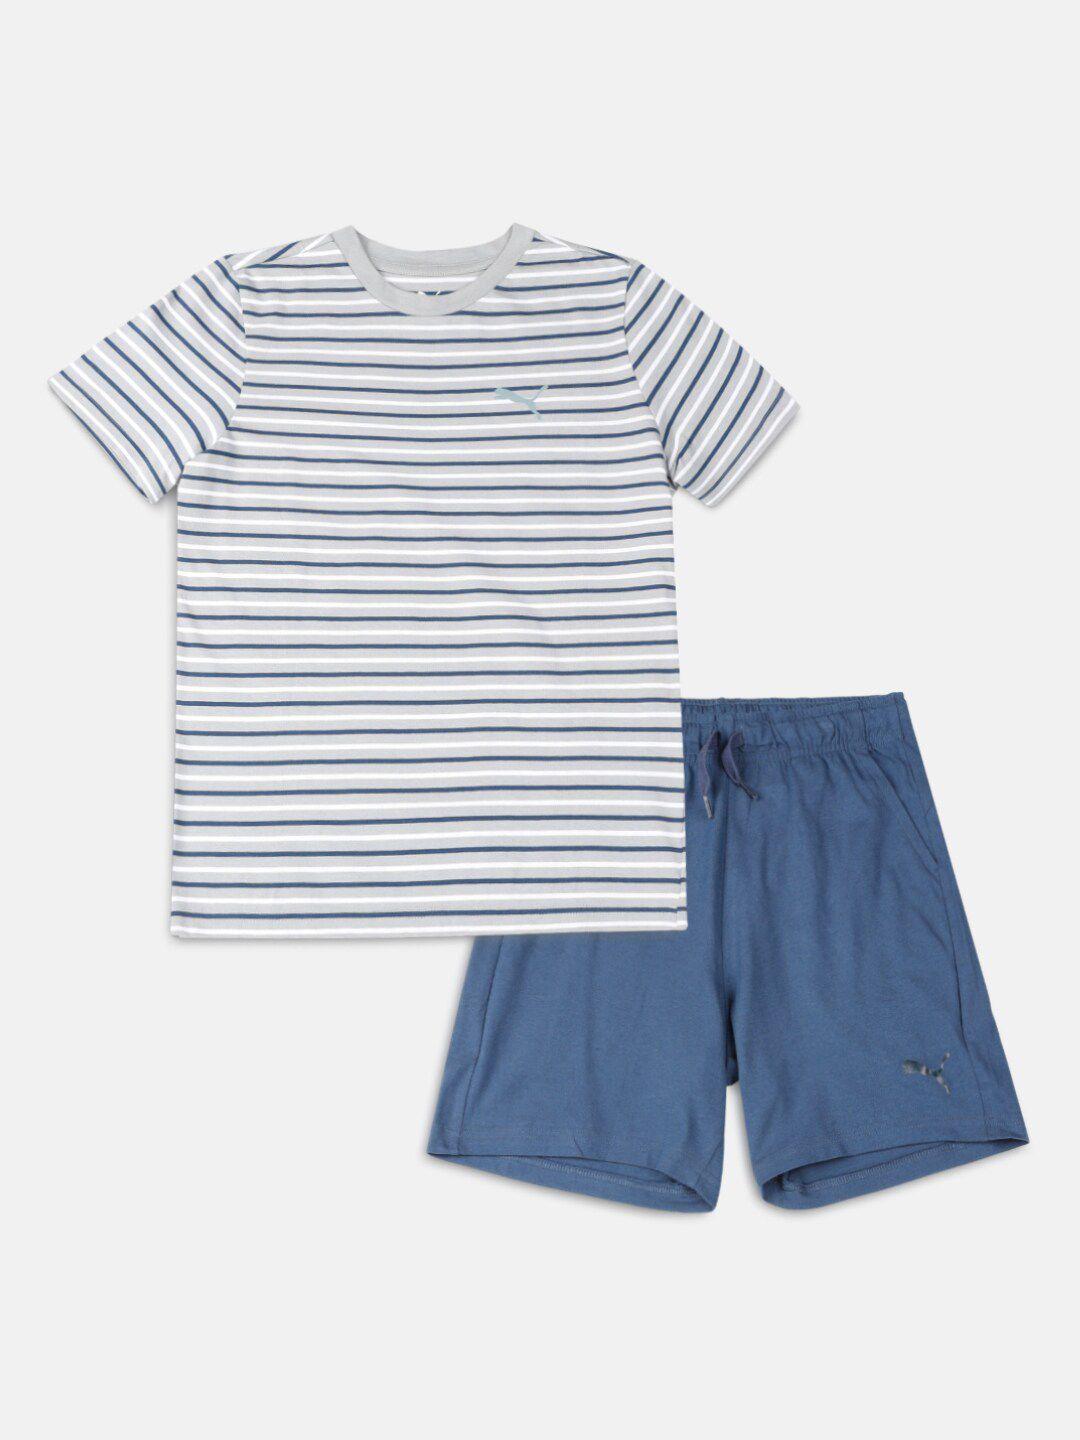 puma boys grey & navy blue striped t-shirt with shorts